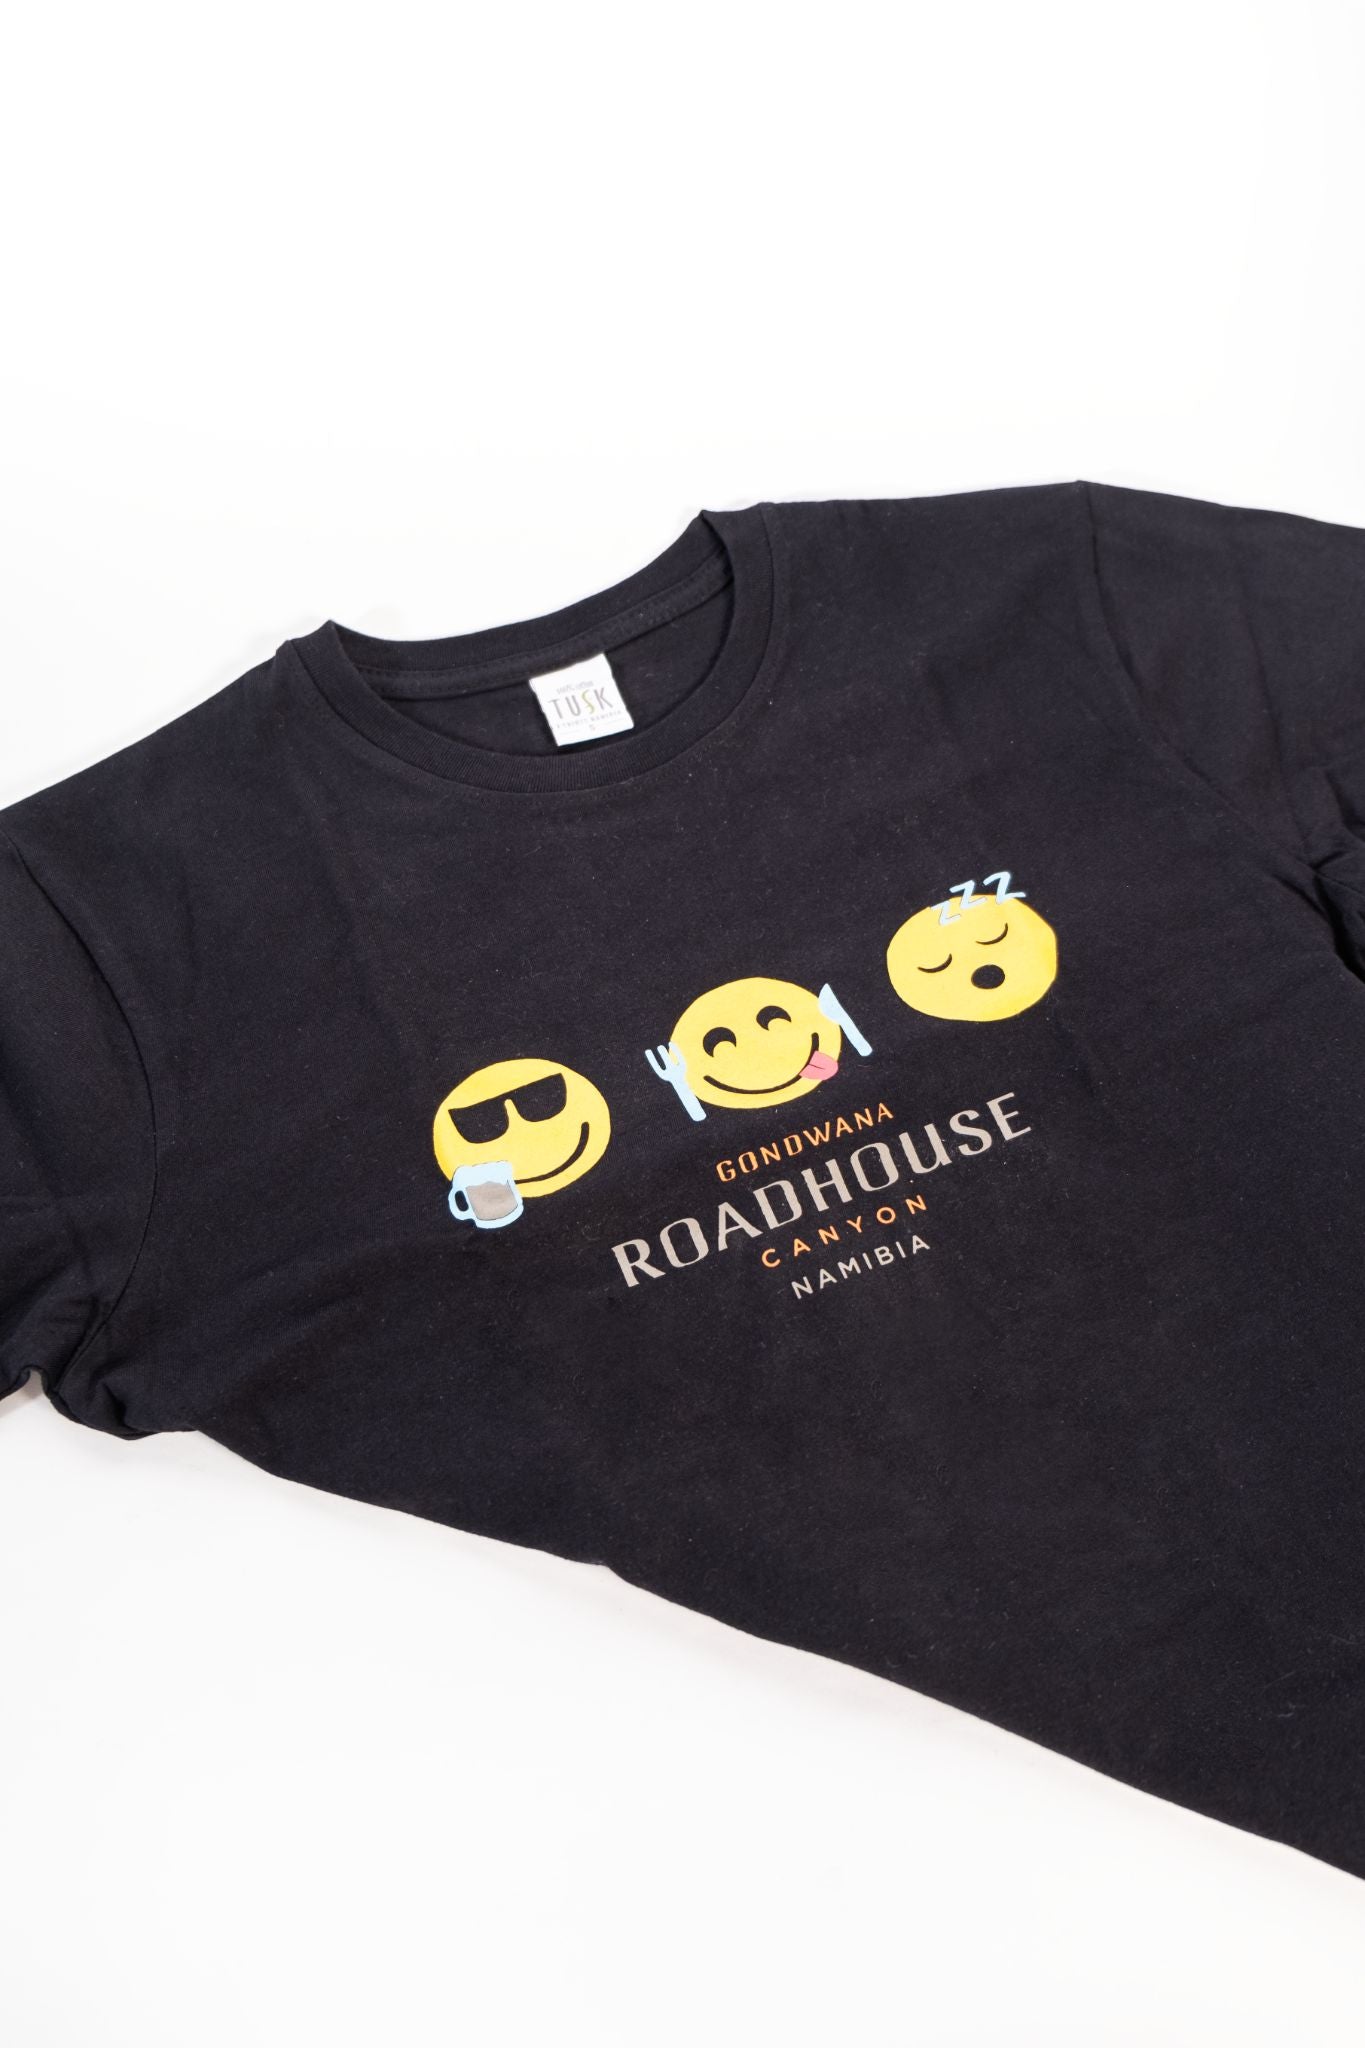 Canyon Roadhouse Emoji T-shirt Adult